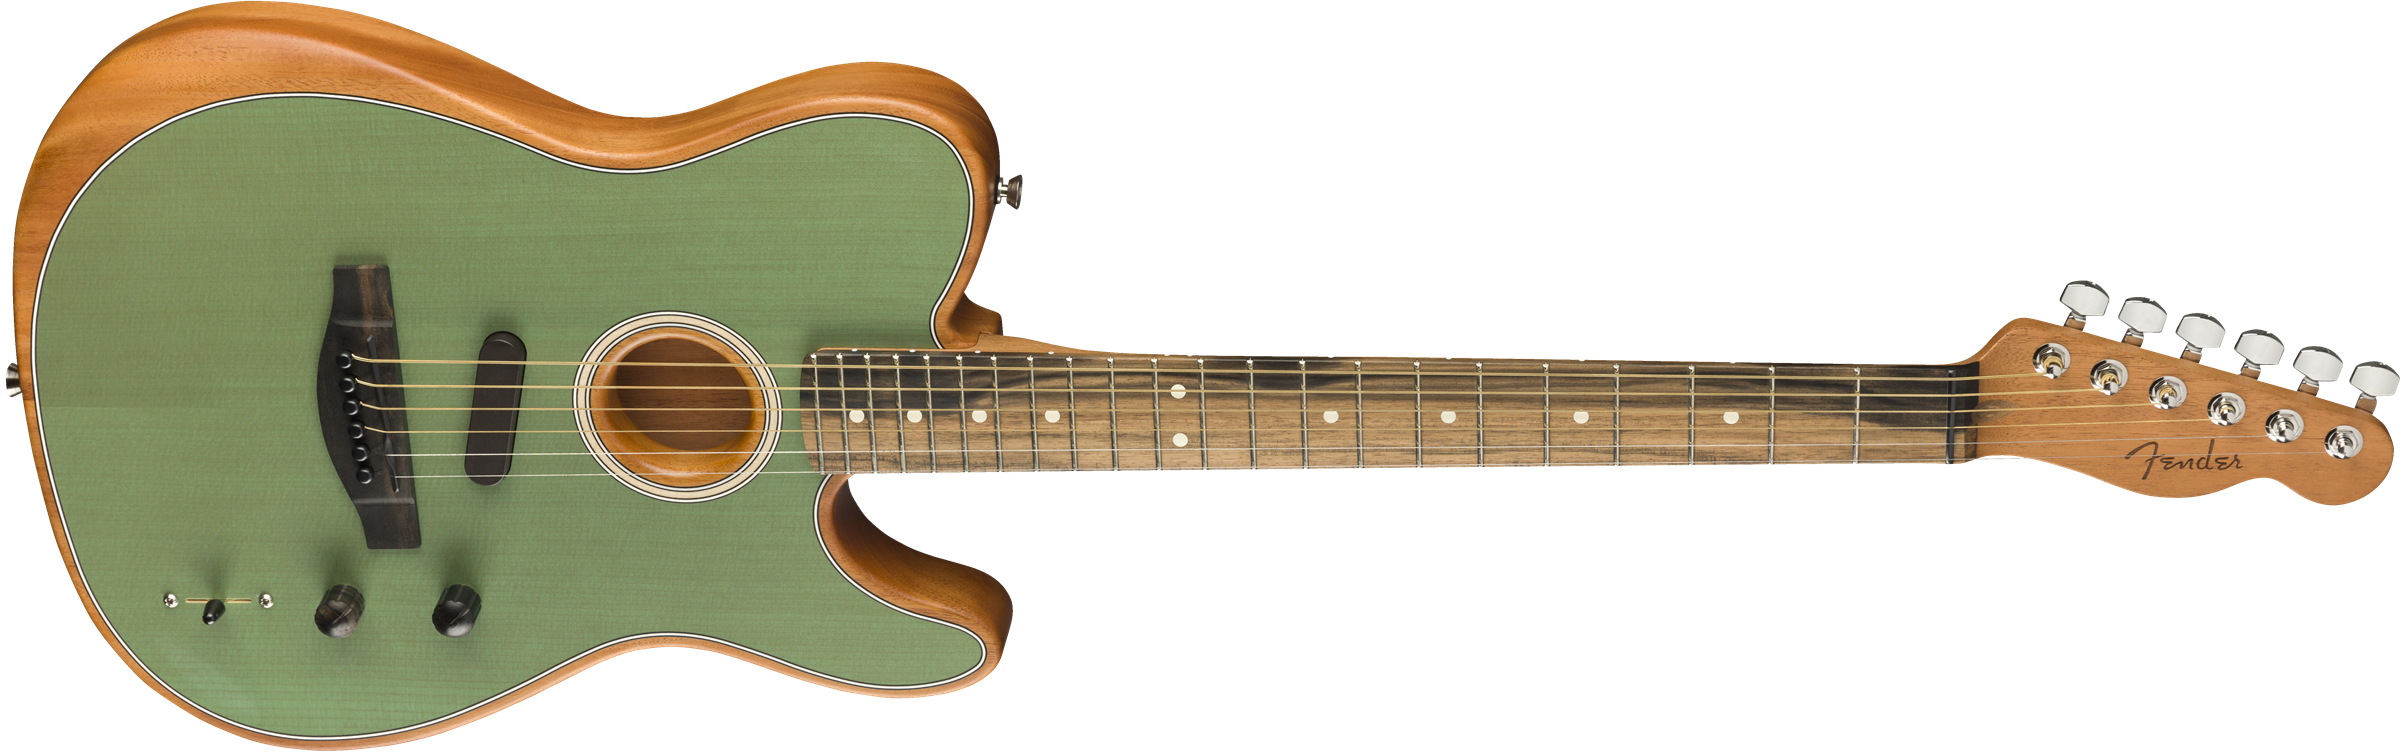 Fender Tele American Acoustasonic Usa Eb - Surf Green - Acoustic guitar & electro - Variation 2